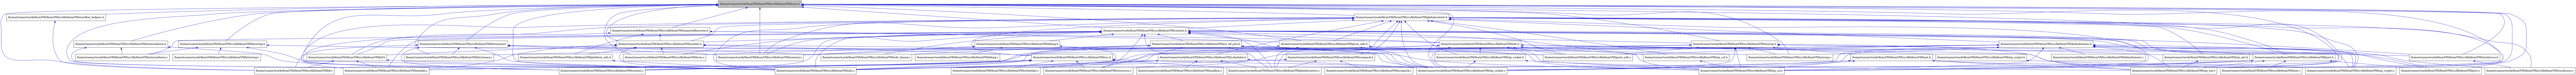 digraph {
    graph [bgcolor="#00000000"]
    node [shape=rectangle style=filled fillcolor="#FFFFFF" font=Helvetica padding=2]
    edge [color="#1414CE"]
    "2" [label="/home/runner/work/AtomVM/AtomVM/src/libAtomVM/bif.c" tooltip="/home/runner/work/AtomVM/AtomVM/src/libAtomVM/bif.c"]
    "43" [label="/home/runner/work/AtomVM/AtomVM/src/libAtomVM/dictionary.c" tooltip="/home/runner/work/AtomVM/AtomVM/src/libAtomVM/dictionary.c"]
    "10" [label="/home/runner/work/AtomVM/AtomVM/src/libAtomVM/bif.h" tooltip="/home/runner/work/AtomVM/AtomVM/src/libAtomVM/bif.h"]
    "44" [label="/home/runner/work/AtomVM/AtomVM/src/libAtomVM/dictionary.h" tooltip="/home/runner/work/AtomVM/AtomVM/src/libAtomVM/dictionary.h"]
    "4" [label="/home/runner/work/AtomVM/AtomVM/src/libAtomVM/bitstring.c" tooltip="/home/runner/work/AtomVM/AtomVM/src/libAtomVM/bitstring.c"]
    "3" [label="/home/runner/work/AtomVM/AtomVM/src/libAtomVM/bitstring.h" tooltip="/home/runner/work/AtomVM/AtomVM/src/libAtomVM/bitstring.h"]
    "30" [label="/home/runner/work/AtomVM/AtomVM/src/libAtomVM/platform_nifs.h" tooltip="/home/runner/work/AtomVM/AtomVM/src/libAtomVM/platform_nifs.h"]
    "20" [label="/home/runner/work/AtomVM/AtomVM/src/libAtomVM/posix_nifs.c" tooltip="/home/runner/work/AtomVM/AtomVM/src/libAtomVM/posix_nifs.c"]
    "46" [label="/home/runner/work/AtomVM/AtomVM/src/libAtomVM/posix_nifs.h" tooltip="/home/runner/work/AtomVM/AtomVM/src/libAtomVM/posix_nifs.h"]
    "52" [label="/home/runner/work/AtomVM/AtomVM/src/libAtomVM/defaultatoms.c" tooltip="/home/runner/work/AtomVM/AtomVM/src/libAtomVM/defaultatoms.c"]
    "51" [label="/home/runner/work/AtomVM/AtomVM/src/libAtomVM/defaultatoms.h" tooltip="/home/runner/work/AtomVM/AtomVM/src/libAtomVM/defaultatoms.h"]
    "25" [label="/home/runner/work/AtomVM/AtomVM/src/libAtomVM/inet.c" tooltip="/home/runner/work/AtomVM/AtomVM/src/libAtomVM/inet.c"]
    "24" [label="/home/runner/work/AtomVM/AtomVM/src/libAtomVM/inet.h" tooltip="/home/runner/work/AtomVM/AtomVM/src/libAtomVM/inet.h"]
    "15" [label="/home/runner/work/AtomVM/AtomVM/src/libAtomVM/scheduler.c" tooltip="/home/runner/work/AtomVM/AtomVM/src/libAtomVM/scheduler.c"]
    "41" [label="/home/runner/work/AtomVM/AtomVM/src/libAtomVM/scheduler.h" tooltip="/home/runner/work/AtomVM/AtomVM/src/libAtomVM/scheduler.h"]
    "45" [label="/home/runner/work/AtomVM/AtomVM/src/libAtomVM/exportedfunction.h" tooltip="/home/runner/work/AtomVM/AtomVM/src/libAtomVM/exportedfunction.h"]
    "8" [label="/home/runner/work/AtomVM/AtomVM/src/libAtomVM/context.c" tooltip="/home/runner/work/AtomVM/AtomVM/src/libAtomVM/context.c"]
    "9" [label="/home/runner/work/AtomVM/AtomVM/src/libAtomVM/context.h" tooltip="/home/runner/work/AtomVM/AtomVM/src/libAtomVM/context.h"]
    "39" [label="/home/runner/work/AtomVM/AtomVM/src/libAtomVM/port.c" tooltip="/home/runner/work/AtomVM/AtomVM/src/libAtomVM/port.c"]
    "40" [label="/home/runner/work/AtomVM/AtomVM/src/libAtomVM/port.h" tooltip="/home/runner/work/AtomVM/AtomVM/src/libAtomVM/port.h"]
    "53" [label="/home/runner/work/AtomVM/AtomVM/src/libAtomVM/overflow_helpers.h" tooltip="/home/runner/work/AtomVM/AtomVM/src/libAtomVM/overflow_helpers.h"]
    "32" [label="/home/runner/work/AtomVM/AtomVM/src/libAtomVM/stacktrace.c" tooltip="/home/runner/work/AtomVM/AtomVM/src/libAtomVM/stacktrace.c"]
    "31" [label="/home/runner/work/AtomVM/AtomVM/src/libAtomVM/stacktrace.h" tooltip="/home/runner/work/AtomVM/AtomVM/src/libAtomVM/stacktrace.h"]
    "21" [label="/home/runner/work/AtomVM/AtomVM/src/libAtomVM/refc_binary.c" tooltip="/home/runner/work/AtomVM/AtomVM/src/libAtomVM/refc_binary.c"]
    "42" [label="/home/runner/work/AtomVM/AtomVM/src/libAtomVM/mailbox.c" tooltip="/home/runner/work/AtomVM/AtomVM/src/libAtomVM/mailbox.c"]
    "11" [label="/home/runner/work/AtomVM/AtomVM/src/libAtomVM/module.c" tooltip="/home/runner/work/AtomVM/AtomVM/src/libAtomVM/module.c"]
    "29" [label="/home/runner/work/AtomVM/AtomVM/src/libAtomVM/module.h" tooltip="/home/runner/work/AtomVM/AtomVM/src/libAtomVM/module.h"]
    "50" [label="/home/runner/work/AtomVM/AtomVM/src/libAtomVM/avmpack.c" tooltip="/home/runner/work/AtomVM/AtomVM/src/libAtomVM/avmpack.c"]
    "49" [label="/home/runner/work/AtomVM/AtomVM/src/libAtomVM/avmpack.h" tooltip="/home/runner/work/AtomVM/AtomVM/src/libAtomVM/avmpack.h"]
    "28" [label="/home/runner/work/AtomVM/AtomVM/src/libAtomVM/term.c" tooltip="/home/runner/work/AtomVM/AtomVM/src/libAtomVM/term.c"]
    "1" [label="/home/runner/work/AtomVM/AtomVM/src/libAtomVM/term.h" tooltip="/home/runner/work/AtomVM/AtomVM/src/libAtomVM/term.h" fillcolor="#BFBFBF"]
    "6" [label="/home/runner/work/AtomVM/AtomVM/src/libAtomVM/interop.c" tooltip="/home/runner/work/AtomVM/AtomVM/src/libAtomVM/interop.c"]
    "19" [label="/home/runner/work/AtomVM/AtomVM/src/libAtomVM/otp_ssl.c" tooltip="/home/runner/work/AtomVM/AtomVM/src/libAtomVM/otp_ssl.c"]
    "23" [label="/home/runner/work/AtomVM/AtomVM/src/libAtomVM/interop.h" tooltip="/home/runner/work/AtomVM/AtomVM/src/libAtomVM/interop.h"]
    "38" [label="/home/runner/work/AtomVM/AtomVM/src/libAtomVM/otp_ssl.h" tooltip="/home/runner/work/AtomVM/AtomVM/src/libAtomVM/otp_ssl.h"]
    "22" [label="/home/runner/work/AtomVM/AtomVM/src/libAtomVM/resources.c" tooltip="/home/runner/work/AtomVM/AtomVM/src/libAtomVM/resources.c"]
    "27" [label="/home/runner/work/AtomVM/AtomVM/src/libAtomVM/otp_crypto.c" tooltip="/home/runner/work/AtomVM/AtomVM/src/libAtomVM/otp_crypto.c"]
    "35" [label="/home/runner/work/AtomVM/AtomVM/src/libAtomVM/otp_crypto.h" tooltip="/home/runner/work/AtomVM/AtomVM/src/libAtomVM/otp_crypto.h"]
    "26" [label="/home/runner/work/AtomVM/AtomVM/src/libAtomVM/otp_net.c" tooltip="/home/runner/work/AtomVM/AtomVM/src/libAtomVM/otp_net.c"]
    "36" [label="/home/runner/work/AtomVM/AtomVM/src/libAtomVM/otp_net.h" tooltip="/home/runner/work/AtomVM/AtomVM/src/libAtomVM/otp_net.h"]
    "16" [label="/home/runner/work/AtomVM/AtomVM/src/libAtomVM/erl_nif_priv.h" tooltip="/home/runner/work/AtomVM/AtomVM/src/libAtomVM/erl_nif_priv.h"]
    "33" [label="/home/runner/work/AtomVM/AtomVM/src/libAtomVM/sys.h" tooltip="/home/runner/work/AtomVM/AtomVM/src/libAtomVM/sys.h"]
    "7" [label="/home/runner/work/AtomVM/AtomVM/src/libAtomVM/nifs.c" tooltip="/home/runner/work/AtomVM/AtomVM/src/libAtomVM/nifs.c"]
    "34" [label="/home/runner/work/AtomVM/AtomVM/src/libAtomVM/nifs.h" tooltip="/home/runner/work/AtomVM/AtomVM/src/libAtomVM/nifs.h"]
    "13" [label="/home/runner/work/AtomVM/AtomVM/src/libAtomVM/debug.c" tooltip="/home/runner/work/AtomVM/AtomVM/src/libAtomVM/debug.c"]
    "12" [label="/home/runner/work/AtomVM/AtomVM/src/libAtomVM/debug.h" tooltip="/home/runner/work/AtomVM/AtomVM/src/libAtomVM/debug.h"]
    "17" [label="/home/runner/work/AtomVM/AtomVM/src/libAtomVM/globalcontext.c" tooltip="/home/runner/work/AtomVM/AtomVM/src/libAtomVM/globalcontext.c"]
    "48" [label="/home/runner/work/AtomVM/AtomVM/src/libAtomVM/globalcontext.h" tooltip="/home/runner/work/AtomVM/AtomVM/src/libAtomVM/globalcontext.h"]
    "14" [label="/home/runner/work/AtomVM/AtomVM/src/libAtomVM/memory.c" tooltip="/home/runner/work/AtomVM/AtomVM/src/libAtomVM/memory.c"]
    "18" [label="/home/runner/work/AtomVM/AtomVM/src/libAtomVM/otp_socket.c" tooltip="/home/runner/work/AtomVM/AtomVM/src/libAtomVM/otp_socket.c"]
    "37" [label="/home/runner/work/AtomVM/AtomVM/src/libAtomVM/otp_socket.h" tooltip="/home/runner/work/AtomVM/AtomVM/src/libAtomVM/otp_socket.h"]
    "5" [label="/home/runner/work/AtomVM/AtomVM/src/libAtomVM/externalterm.c" tooltip="/home/runner/work/AtomVM/AtomVM/src/libAtomVM/externalterm.c"]
    "47" [label="/home/runner/work/AtomVM/AtomVM/src/libAtomVM/externalterm.h" tooltip="/home/runner/work/AtomVM/AtomVM/src/libAtomVM/externalterm.h"]
    "10" -> "2" [dir=back tooltip="include"]
    "10" -> "11" [dir=back tooltip="include"]
    "10" -> "7" [dir=back tooltip="include"]
    "44" -> "2" [dir=back tooltip="include"]
    "44" -> "8" [dir=back tooltip="include"]
    "44" -> "43" [dir=back tooltip="include"]
    "44" -> "14" [dir=back tooltip="include"]
    "44" -> "7" [dir=back tooltip="include"]
    "44" -> "18" [dir=back tooltip="include"]
    "44" -> "21" [dir=back tooltip="include"]
    "3" -> "4" [dir=back tooltip="include"]
    "3" -> "5" [dir=back tooltip="include"]
    "3" -> "6" [dir=back tooltip="include"]
    "3" -> "7" [dir=back tooltip="include"]
    "30" -> "7" [dir=back tooltip="include"]
    "46" -> "17" [dir=back tooltip="include"]
    "46" -> "7" [dir=back tooltip="include"]
    "46" -> "18" [dir=back tooltip="include"]
    "46" -> "20" [dir=back tooltip="include"]
    "51" -> "2" [dir=back tooltip="include"]
    "51" -> "52" [dir=back tooltip="include"]
    "51" -> "43" [dir=back tooltip="include"]
    "51" -> "17" [dir=back tooltip="include"]
    "51" -> "6" [dir=back tooltip="include"]
    "51" -> "7" [dir=back tooltip="include"]
    "51" -> "27" [dir=back tooltip="include"]
    "51" -> "26" [dir=back tooltip="include"]
    "51" -> "18" [dir=back tooltip="include"]
    "51" -> "19" [dir=back tooltip="include"]
    "51" -> "39" [dir=back tooltip="include"]
    "51" -> "40" [dir=back tooltip="include"]
    "51" -> "20" [dir=back tooltip="include"]
    "51" -> "22" [dir=back tooltip="include"]
    "51" -> "32" [dir=back tooltip="include"]
    "24" -> "25" [dir=back tooltip="include"]
    "24" -> "26" [dir=back tooltip="include"]
    "24" -> "18" [dir=back tooltip="include"]
    "24" -> "19" [dir=back tooltip="include"]
    "41" -> "17" [dir=back tooltip="include"]
    "41" -> "42" [dir=back tooltip="include"]
    "41" -> "7" [dir=back tooltip="include"]
    "41" -> "18" [dir=back tooltip="include"]
    "41" -> "15" [dir=back tooltip="include"]
    "45" -> "10" [dir=back tooltip="include"]
    "45" -> "29" [dir=back tooltip="include"]
    "45" -> "34" [dir=back tooltip="include"]
    "45" -> "30" [dir=back tooltip="include"]
    "45" -> "46" [dir=back tooltip="include"]
    "9" -> "10" [dir=back tooltip="include"]
    "9" -> "8" [dir=back tooltip="include"]
    "9" -> "12" [dir=back tooltip="include"]
    "9" -> "16" [dir=back tooltip="include"]
    "9" -> "5" [dir=back tooltip="include"]
    "9" -> "17" [dir=back tooltip="include"]
    "9" -> "23" [dir=back tooltip="include"]
    "9" -> "14" [dir=back tooltip="include"]
    "9" -> "11" [dir=back tooltip="include"]
    "9" -> "29" [dir=back tooltip="include"]
    "9" -> "7" [dir=back tooltip="include"]
    "9" -> "34" [dir=back tooltip="include"]
    "9" -> "27" [dir=back tooltip="include"]
    "9" -> "26" [dir=back tooltip="include"]
    "9" -> "18" [dir=back tooltip="include"]
    "9" -> "19" [dir=back tooltip="include"]
    "9" -> "39" [dir=back tooltip="include"]
    "9" -> "40" [dir=back tooltip="include"]
    "9" -> "21" [dir=back tooltip="include"]
    "9" -> "22" [dir=back tooltip="include"]
    "9" -> "41" [dir=back tooltip="include"]
    "9" -> "31" [dir=back tooltip="include"]
    "9" -> "28" [dir=back tooltip="include"]
    "40" -> "25" [dir=back tooltip="include"]
    "40" -> "7" [dir=back tooltip="include"]
    "40" -> "26" [dir=back tooltip="include"]
    "40" -> "18" [dir=back tooltip="include"]
    "40" -> "19" [dir=back tooltip="include"]
    "40" -> "39" [dir=back tooltip="include"]
    "53" -> "2" [dir=back tooltip="include"]
    "31" -> "32" [dir=back tooltip="include"]
    "29" -> "10" [dir=back tooltip="include"]
    "29" -> "11" [dir=back tooltip="include"]
    "29" -> "7" [dir=back tooltip="include"]
    "29" -> "30" [dir=back tooltip="include"]
    "29" -> "31" [dir=back tooltip="include"]
    "29" -> "33" [dir=back tooltip="include"]
    "29" -> "28" [dir=back tooltip="include"]
    "49" -> "50" [dir=back tooltip="include"]
    "49" -> "17" [dir=back tooltip="include"]
    "49" -> "7" [dir=back tooltip="include"]
    "1" -> "2" [dir=back tooltip="include"]
    "1" -> "3" [dir=back tooltip="include"]
    "1" -> "8" [dir=back tooltip="include"]
    "1" -> "9" [dir=back tooltip="include"]
    "1" -> "43" [dir=back tooltip="include"]
    "1" -> "44" [dir=back tooltip="include"]
    "1" -> "45" [dir=back tooltip="include"]
    "1" -> "47" [dir=back tooltip="include"]
    "1" -> "48" [dir=back tooltip="include"]
    "1" -> "25" [dir=back tooltip="include"]
    "1" -> "6" [dir=back tooltip="include"]
    "1" -> "23" [dir=back tooltip="include"]
    "1" -> "14" [dir=back tooltip="include"]
    "1" -> "11" [dir=back tooltip="include"]
    "1" -> "29" [dir=back tooltip="include"]
    "1" -> "7" [dir=back tooltip="include"]
    "1" -> "27" [dir=back tooltip="include"]
    "1" -> "26" [dir=back tooltip="include"]
    "1" -> "18" [dir=back tooltip="include"]
    "1" -> "19" [dir=back tooltip="include"]
    "1" -> "53" [dir=back tooltip="include"]
    "1" -> "40" [dir=back tooltip="include"]
    "1" -> "46" [dir=back tooltip="include"]
    "1" -> "31" [dir=back tooltip="include"]
    "1" -> "28" [dir=back tooltip="include"]
    "23" -> "24" [dir=back tooltip="include"]
    "23" -> "6" [dir=back tooltip="include"]
    "23" -> "7" [dir=back tooltip="include"]
    "23" -> "27" [dir=back tooltip="include"]
    "23" -> "26" [dir=back tooltip="include"]
    "23" -> "18" [dir=back tooltip="include"]
    "23" -> "19" [dir=back tooltip="include"]
    "23" -> "20" [dir=back tooltip="include"]
    "23" -> "28" [dir=back tooltip="include"]
    "38" -> "19" [dir=back tooltip="include"]
    "35" -> "27" [dir=back tooltip="include"]
    "36" -> "26" [dir=back tooltip="include"]
    "16" -> "8" [dir=back tooltip="include"]
    "16" -> "17" [dir=back tooltip="include"]
    "16" -> "14" [dir=back tooltip="include"]
    "16" -> "18" [dir=back tooltip="include"]
    "16" -> "19" [dir=back tooltip="include"]
    "16" -> "20" [dir=back tooltip="include"]
    "16" -> "21" [dir=back tooltip="include"]
    "16" -> "22" [dir=back tooltip="include"]
    "33" -> "8" [dir=back tooltip="include"]
    "33" -> "17" [dir=back tooltip="include"]
    "33" -> "11" [dir=back tooltip="include"]
    "33" -> "7" [dir=back tooltip="include"]
    "33" -> "18" [dir=back tooltip="include"]
    "33" -> "22" [dir=back tooltip="include"]
    "33" -> "15" [dir=back tooltip="include"]
    "34" -> "11" [dir=back tooltip="include"]
    "34" -> "7" [dir=back tooltip="include"]
    "34" -> "27" [dir=back tooltip="include"]
    "34" -> "35" [dir=back tooltip="include"]
    "34" -> "26" [dir=back tooltip="include"]
    "34" -> "36" [dir=back tooltip="include"]
    "34" -> "18" [dir=back tooltip="include"]
    "34" -> "37" [dir=back tooltip="include"]
    "34" -> "19" [dir=back tooltip="include"]
    "34" -> "38" [dir=back tooltip="include"]
    "34" -> "20" [dir=back tooltip="include"]
    "12" -> "13" [dir=back tooltip="include"]
    "12" -> "14" [dir=back tooltip="include"]
    "12" -> "15" [dir=back tooltip="include"]
    "48" -> "49" [dir=back tooltip="include"]
    "48" -> "8" [dir=back tooltip="include"]
    "48" -> "9" [dir=back tooltip="include"]
    "48" -> "51" [dir=back tooltip="include"]
    "48" -> "17" [dir=back tooltip="include"]
    "48" -> "14" [dir=back tooltip="include"]
    "48" -> "11" [dir=back tooltip="include"]
    "48" -> "29" [dir=back tooltip="include"]
    "48" -> "7" [dir=back tooltip="include"]
    "48" -> "27" [dir=back tooltip="include"]
    "48" -> "26" [dir=back tooltip="include"]
    "48" -> "36" [dir=back tooltip="include"]
    "48" -> "18" [dir=back tooltip="include"]
    "48" -> "37" [dir=back tooltip="include"]
    "48" -> "19" [dir=back tooltip="include"]
    "48" -> "38" [dir=back tooltip="include"]
    "48" -> "39" [dir=back tooltip="include"]
    "48" -> "40" [dir=back tooltip="include"]
    "48" -> "20" [dir=back tooltip="include"]
    "48" -> "46" [dir=back tooltip="include"]
    "48" -> "41" [dir=back tooltip="include"]
    "48" -> "32" [dir=back tooltip="include"]
    "48" -> "33" [dir=back tooltip="include"]
    "37" -> "18" [dir=back tooltip="include"]
    "37" -> "19" [dir=back tooltip="include"]
    "47" -> "5" [dir=back tooltip="include"]
    "47" -> "11" [dir=back tooltip="include"]
    "47" -> "7" [dir=back tooltip="include"]
}